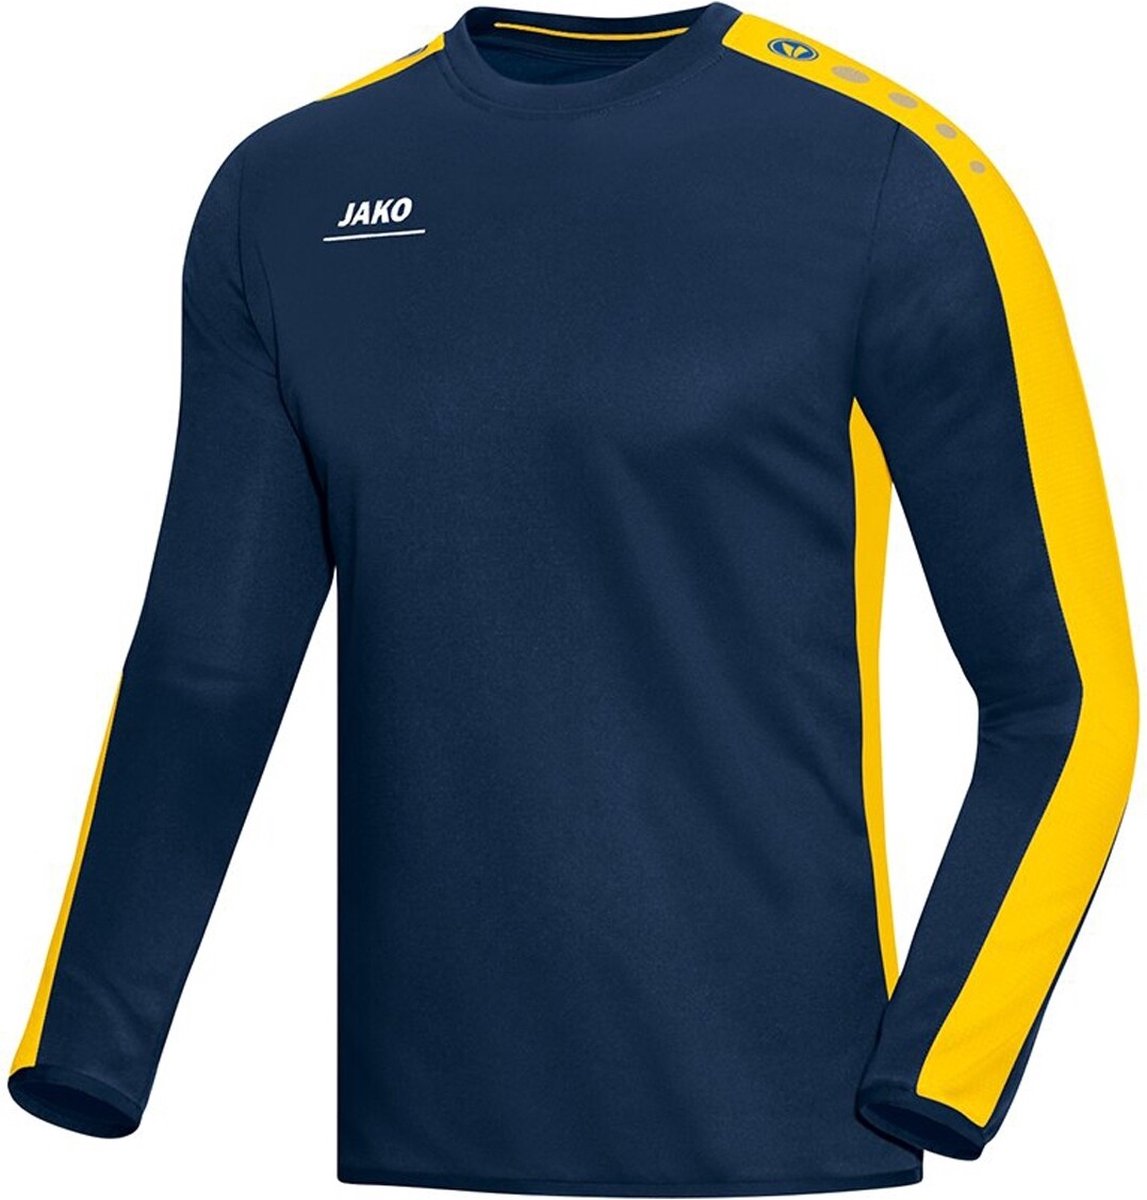 Jako - Sweater Striker Junior - Sweater Junior Blauw - 128 - marine/geel